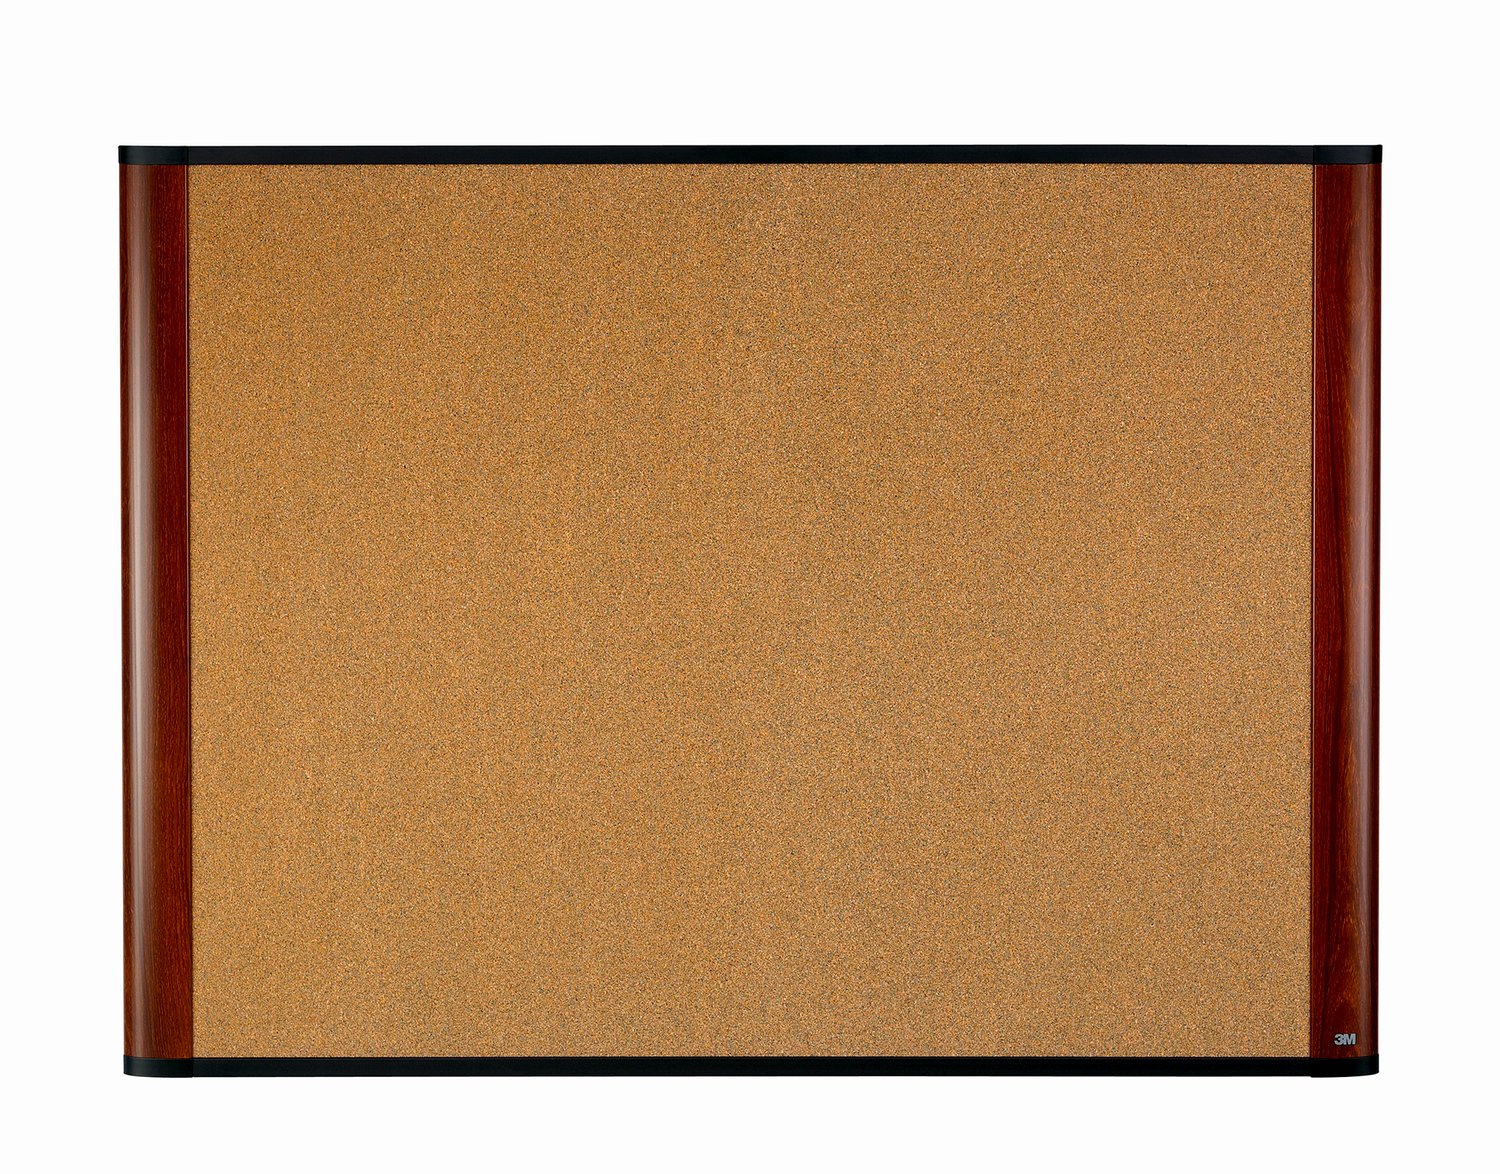 7010369238 - 3M Cork Board C3624MY, 36 in x 24 in x 1 in (91.4 cm x 60.9 cm x 2.5
cm) Mahogany Finish Frame